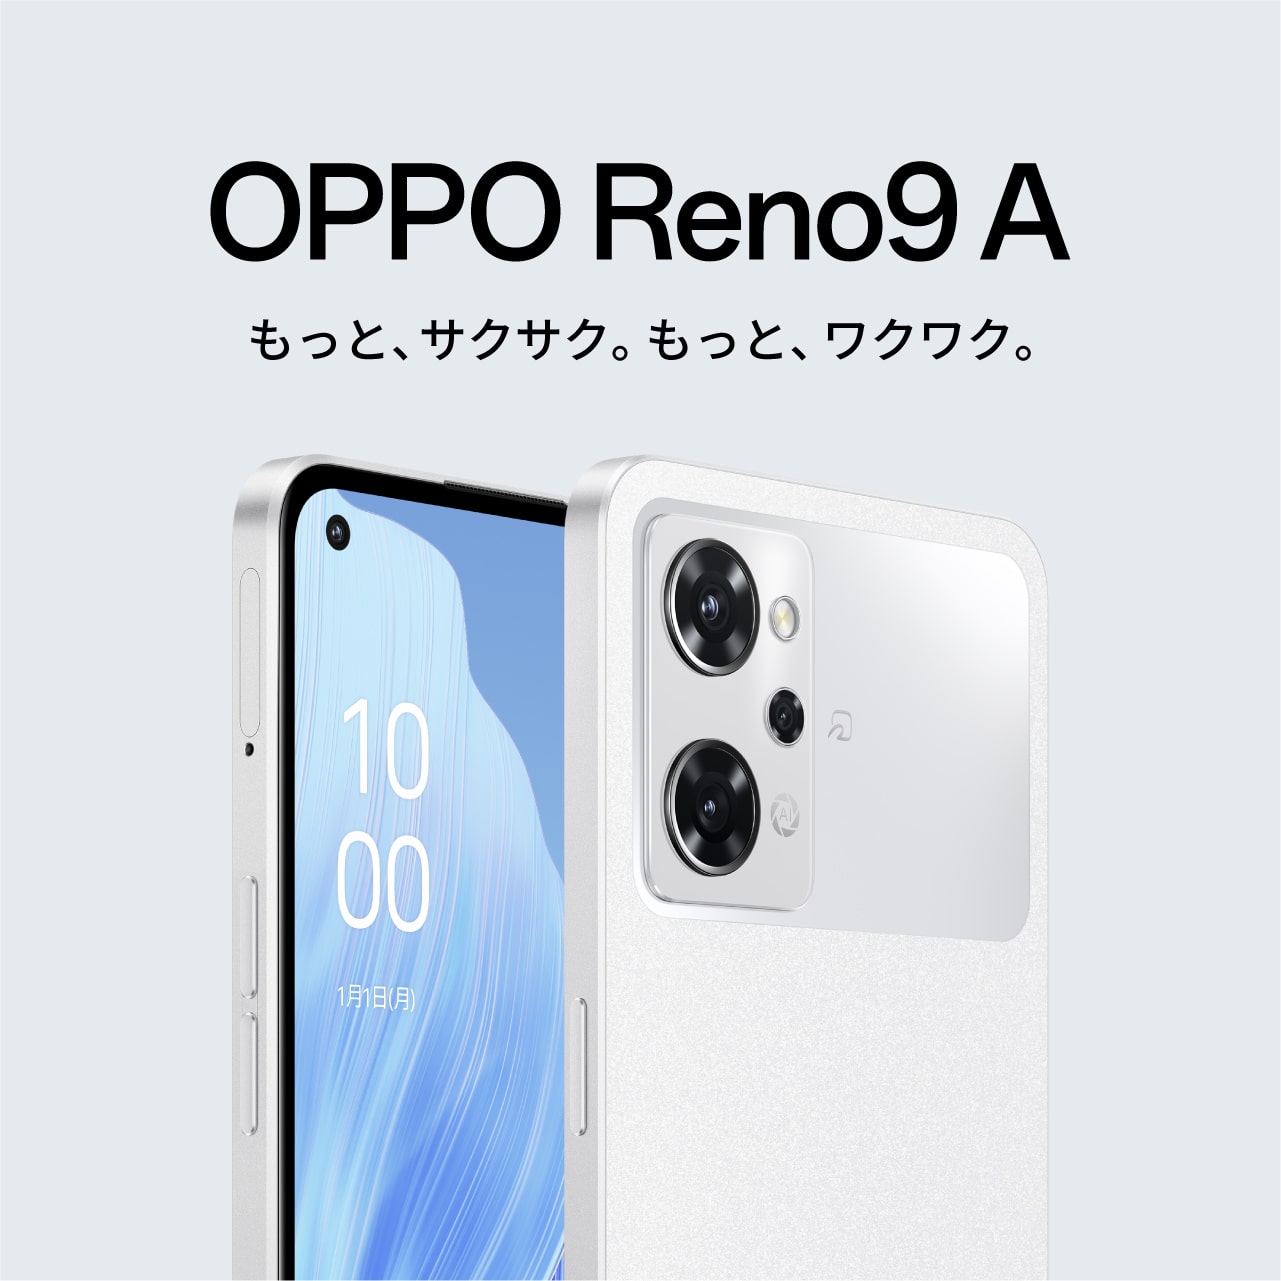 OPPO Reno9 A【SIMFREE】 | スマートフォン | OPPO公式オンラインショップ